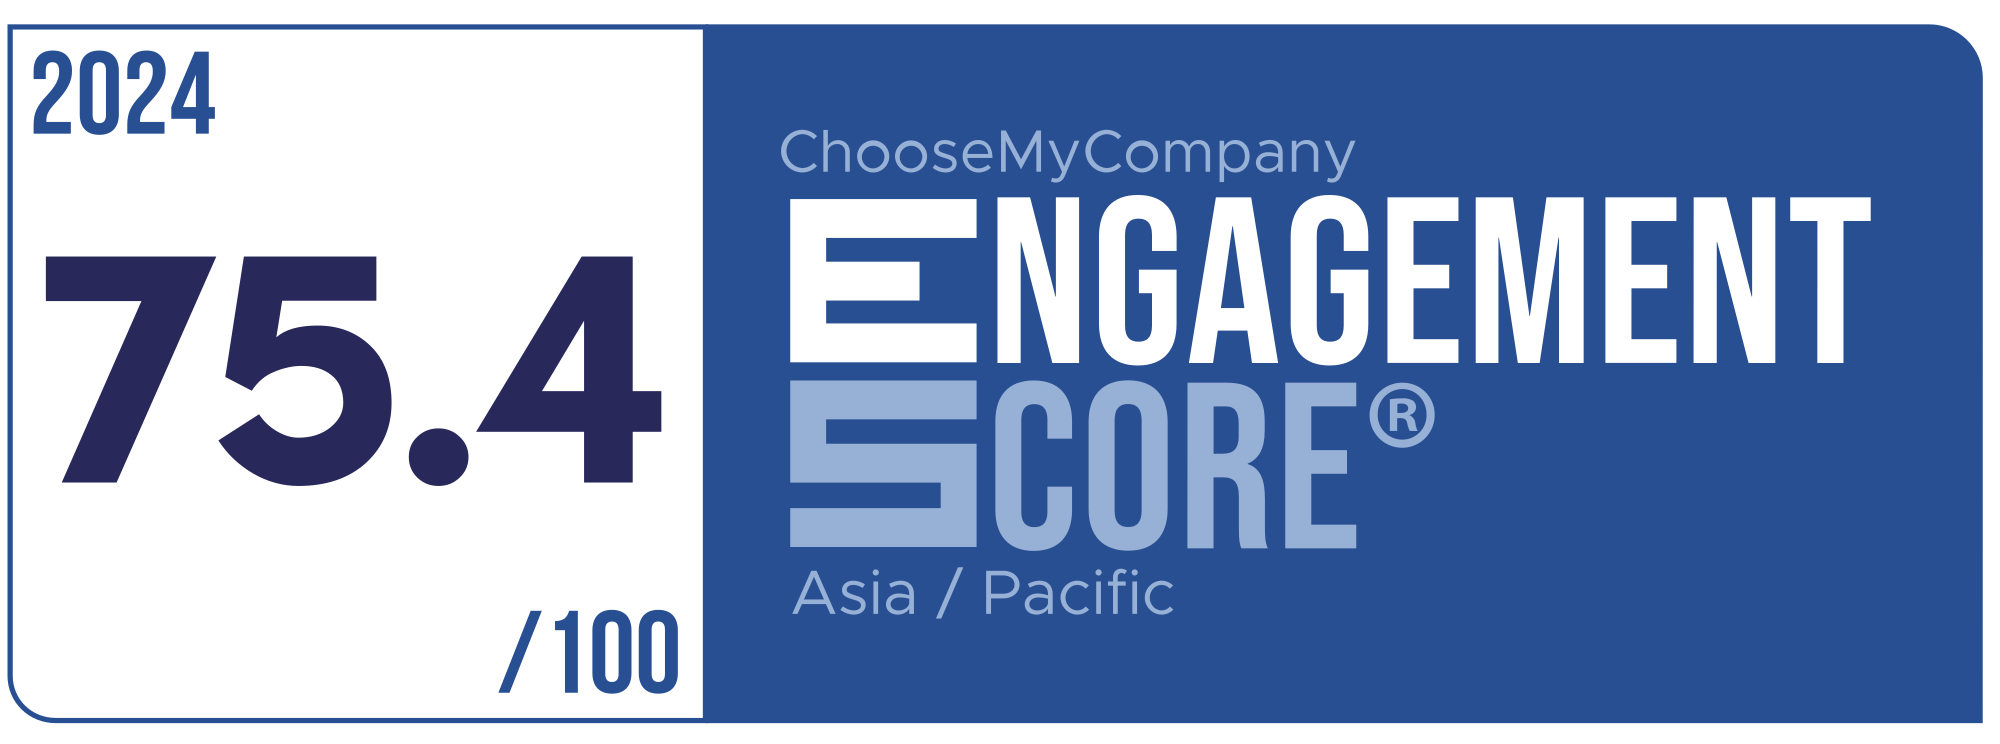 Label Engagement Score 2024 Asia / Pacific